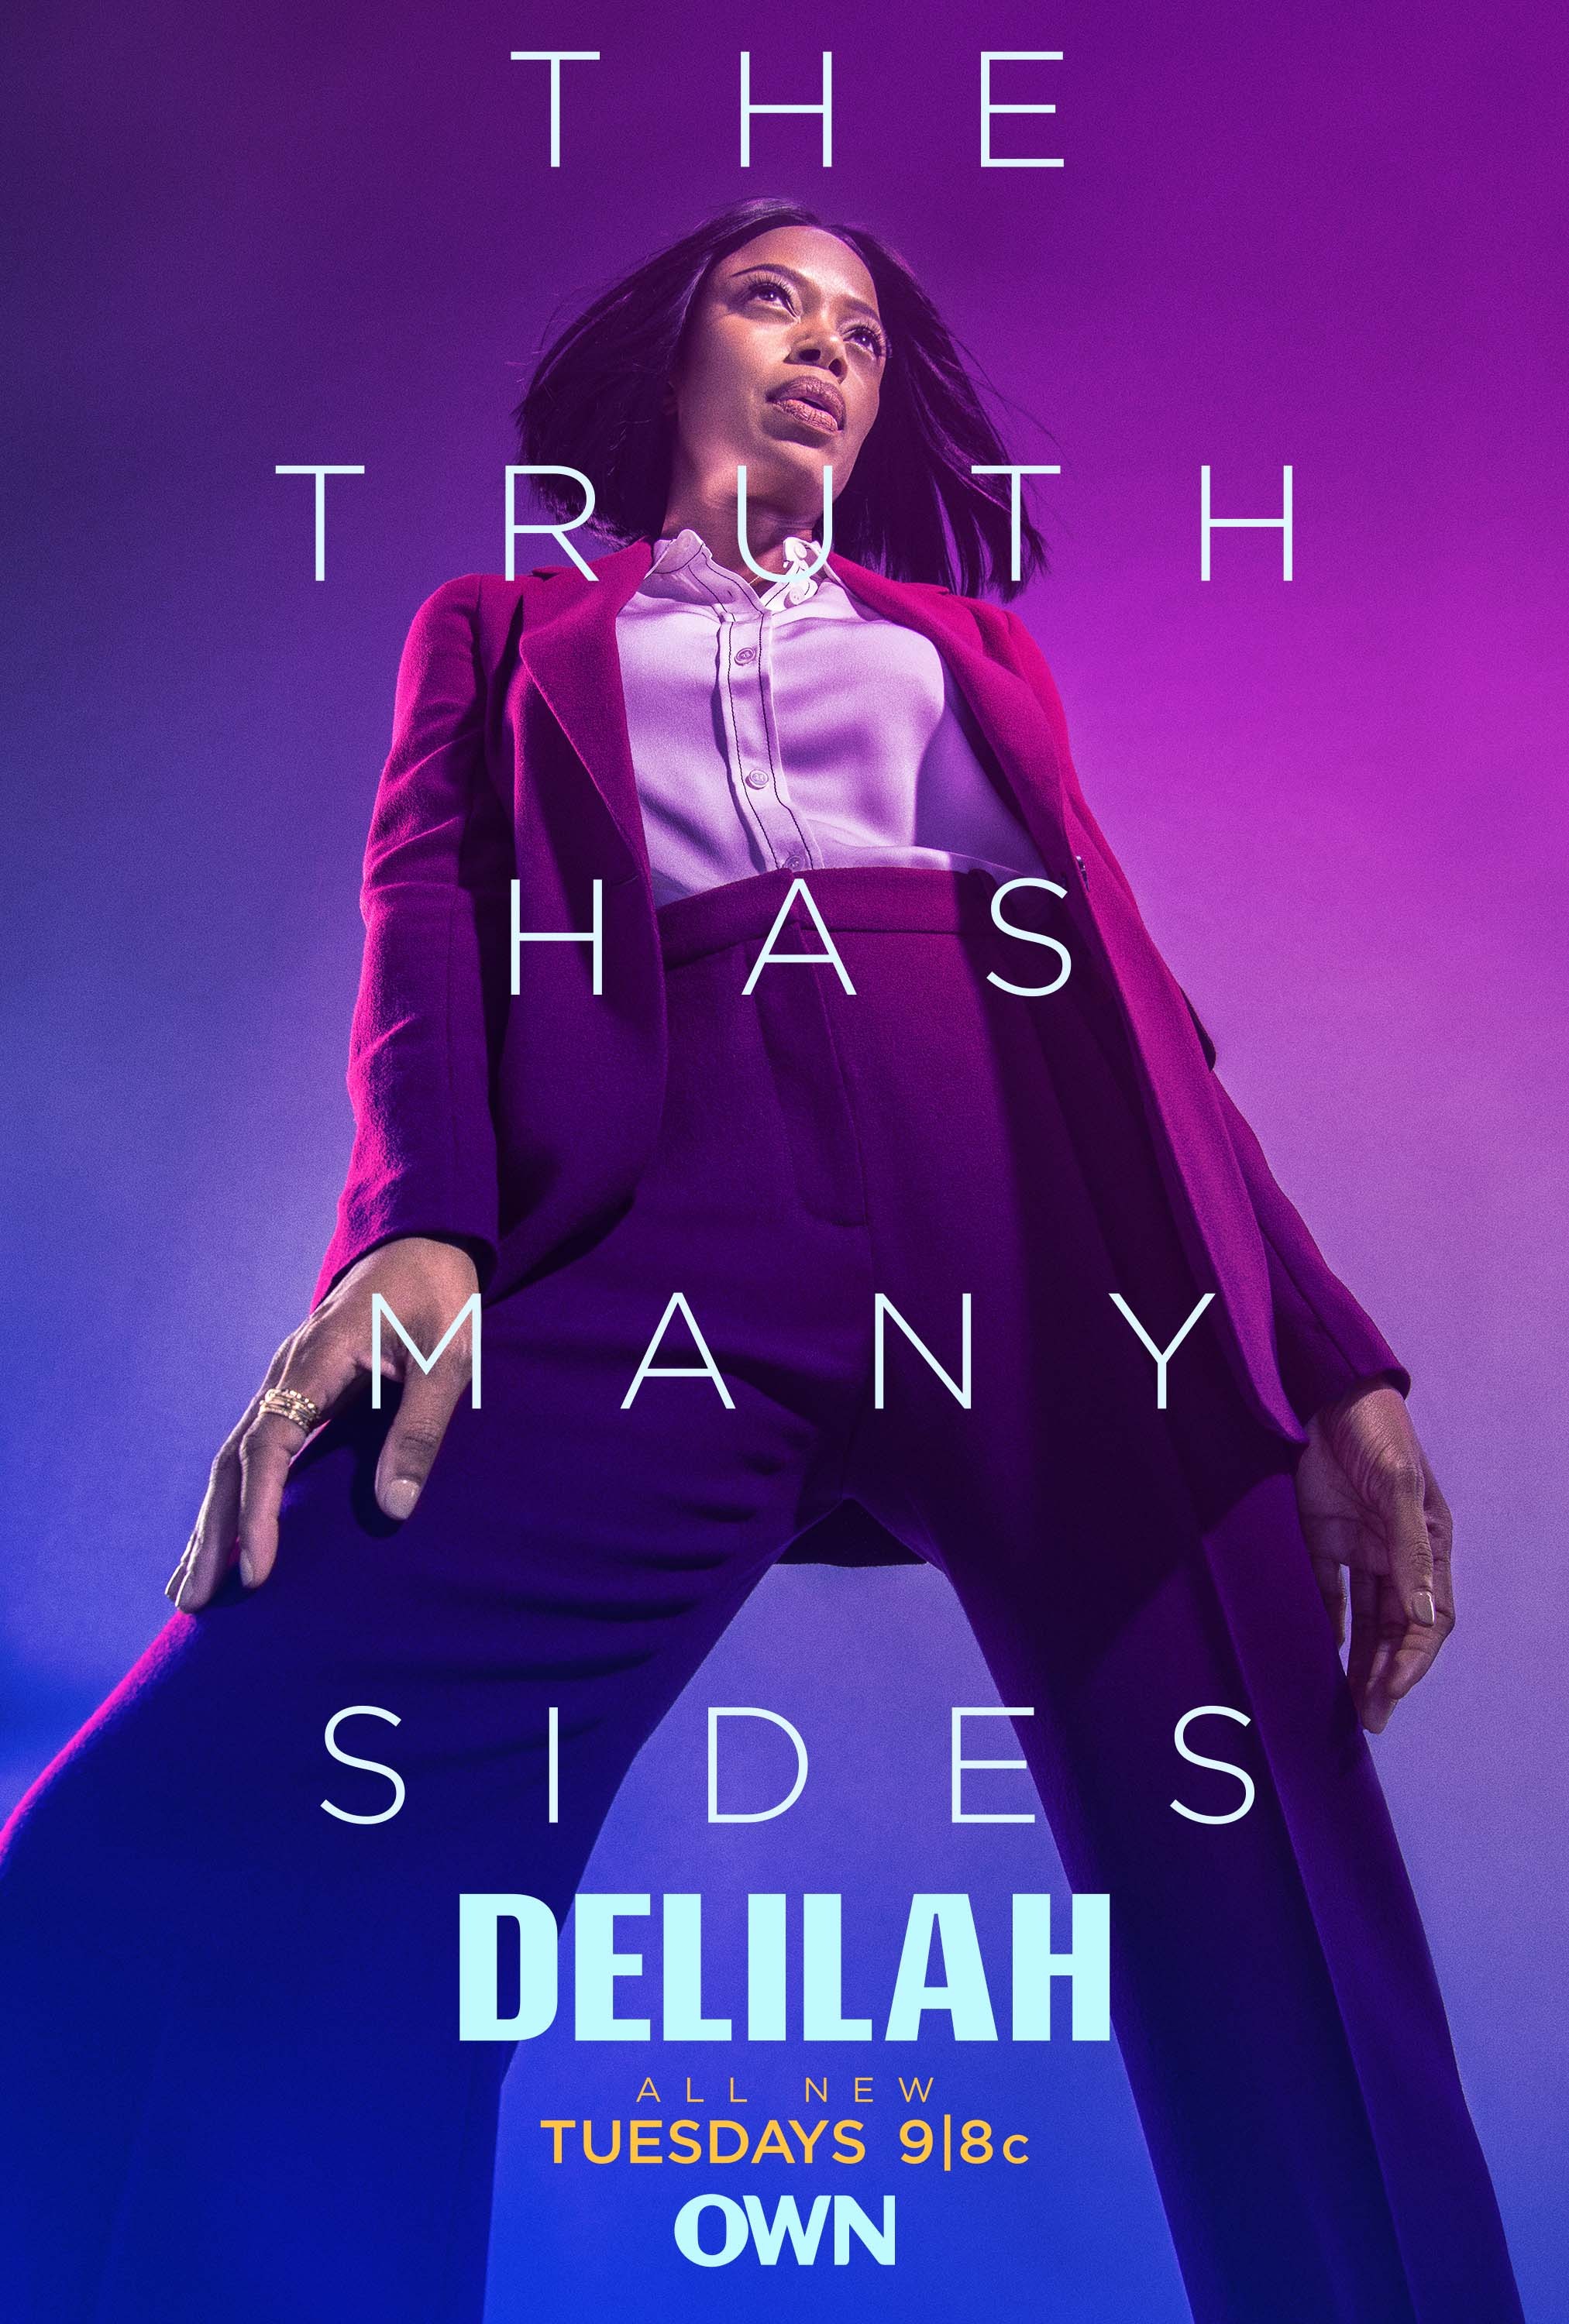 Mega Sized TV Poster Image for Delilah (#4 of 5)